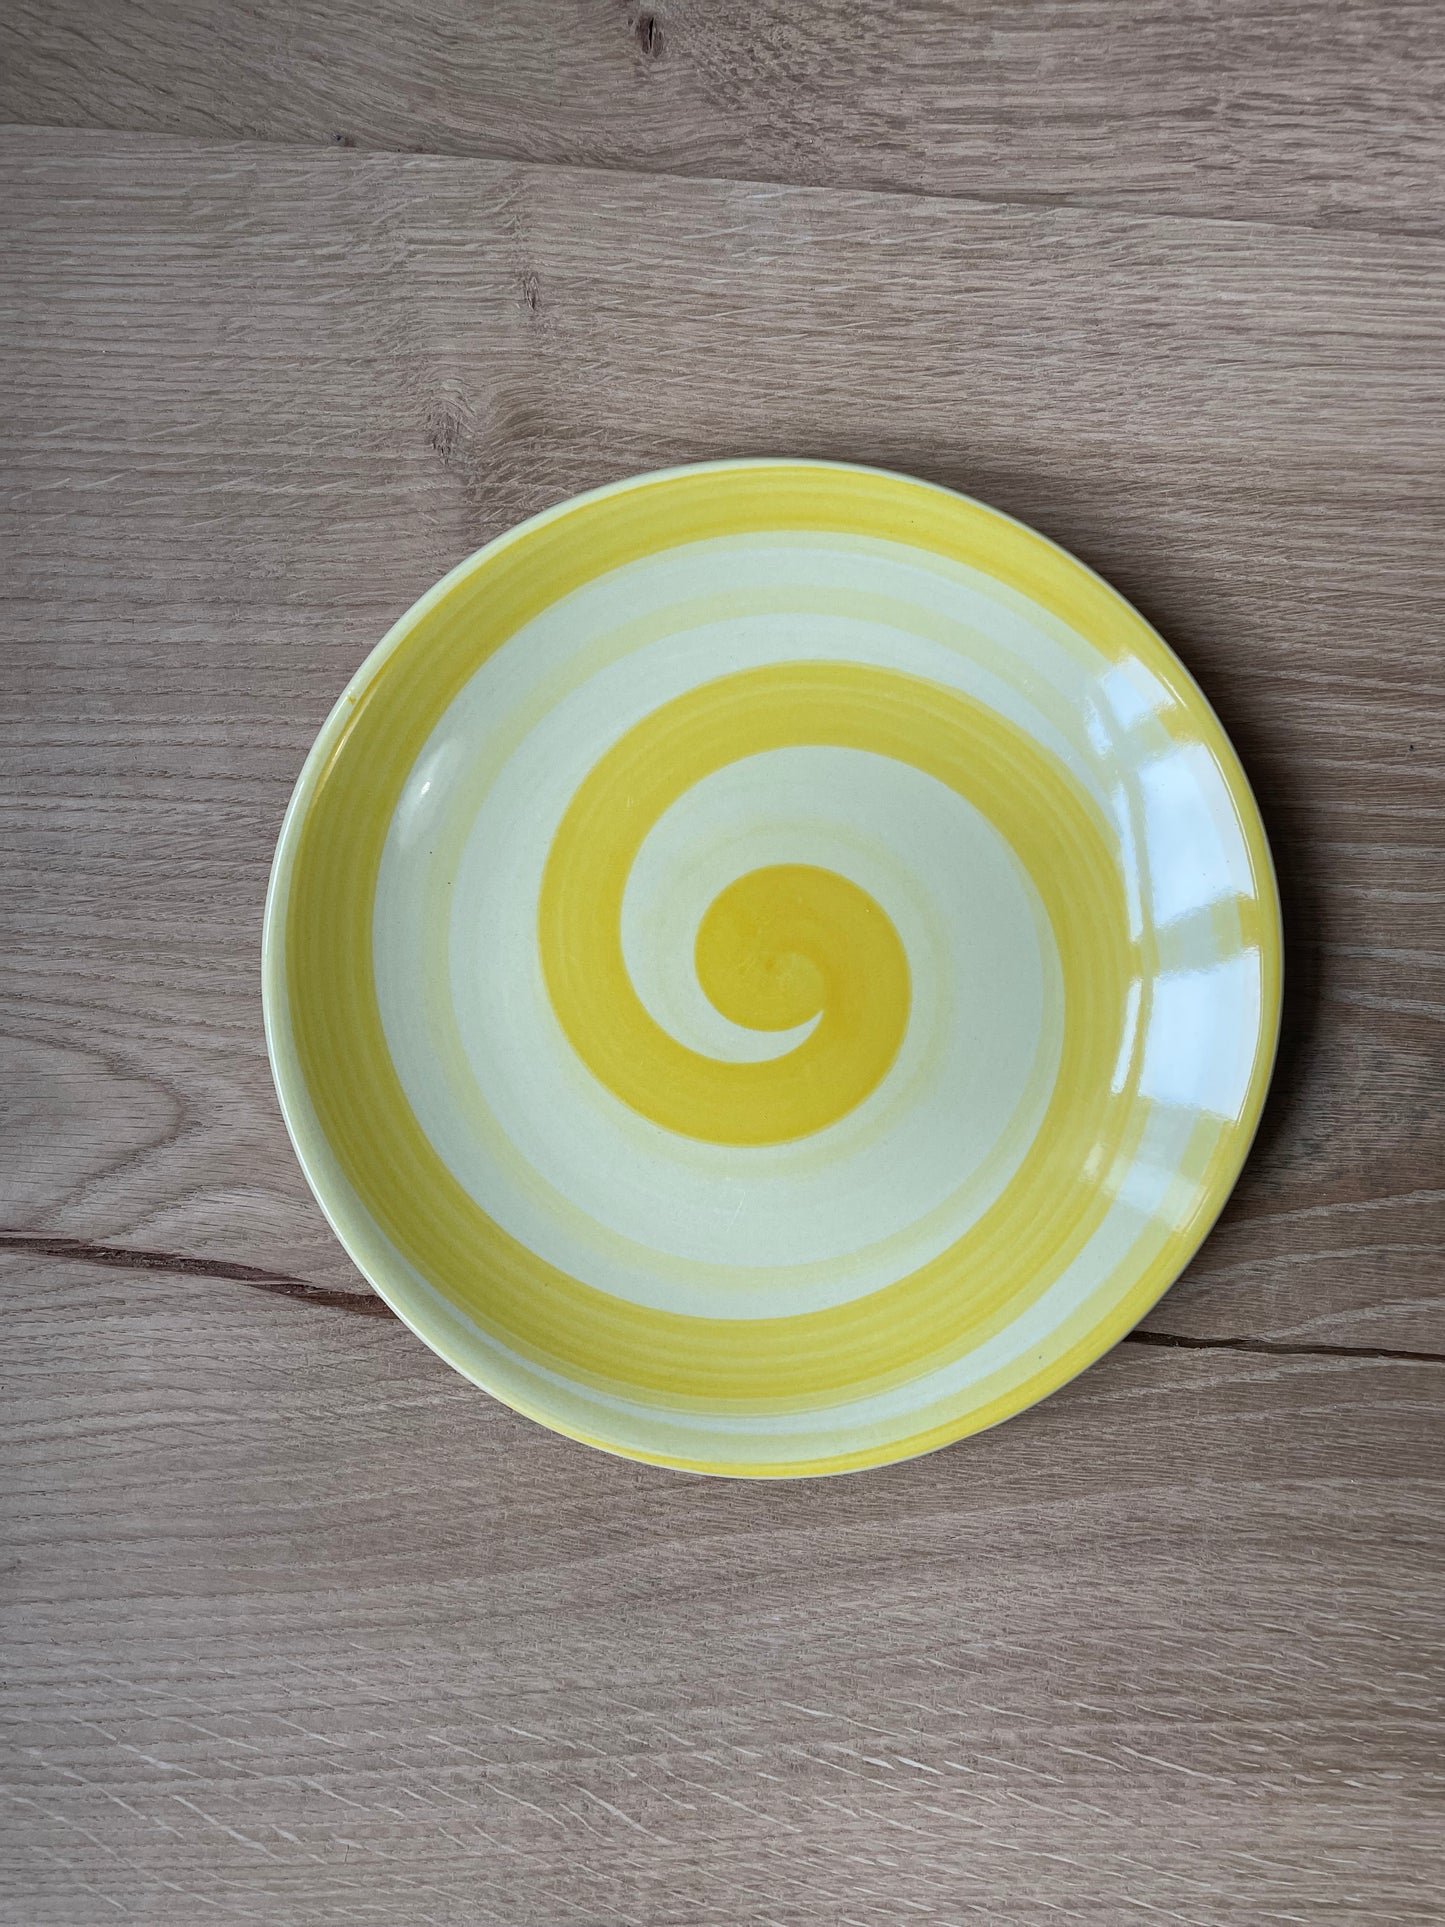 Breakfast plates with wide swirl